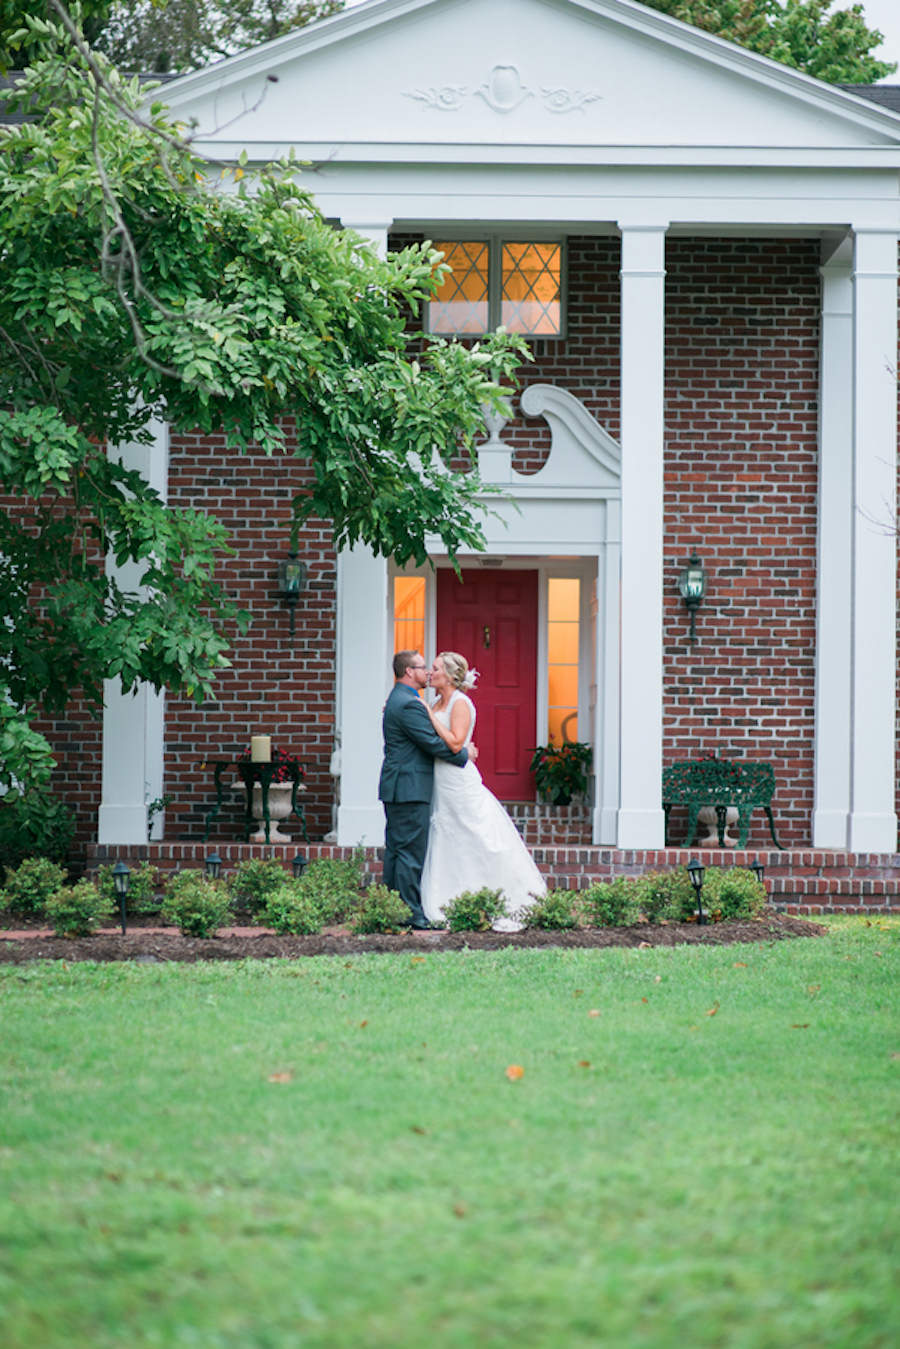 Outdoor, Bradenton Bride and Groom Wedding Portrait | Sarasota Wedding Photographer Kera Photography